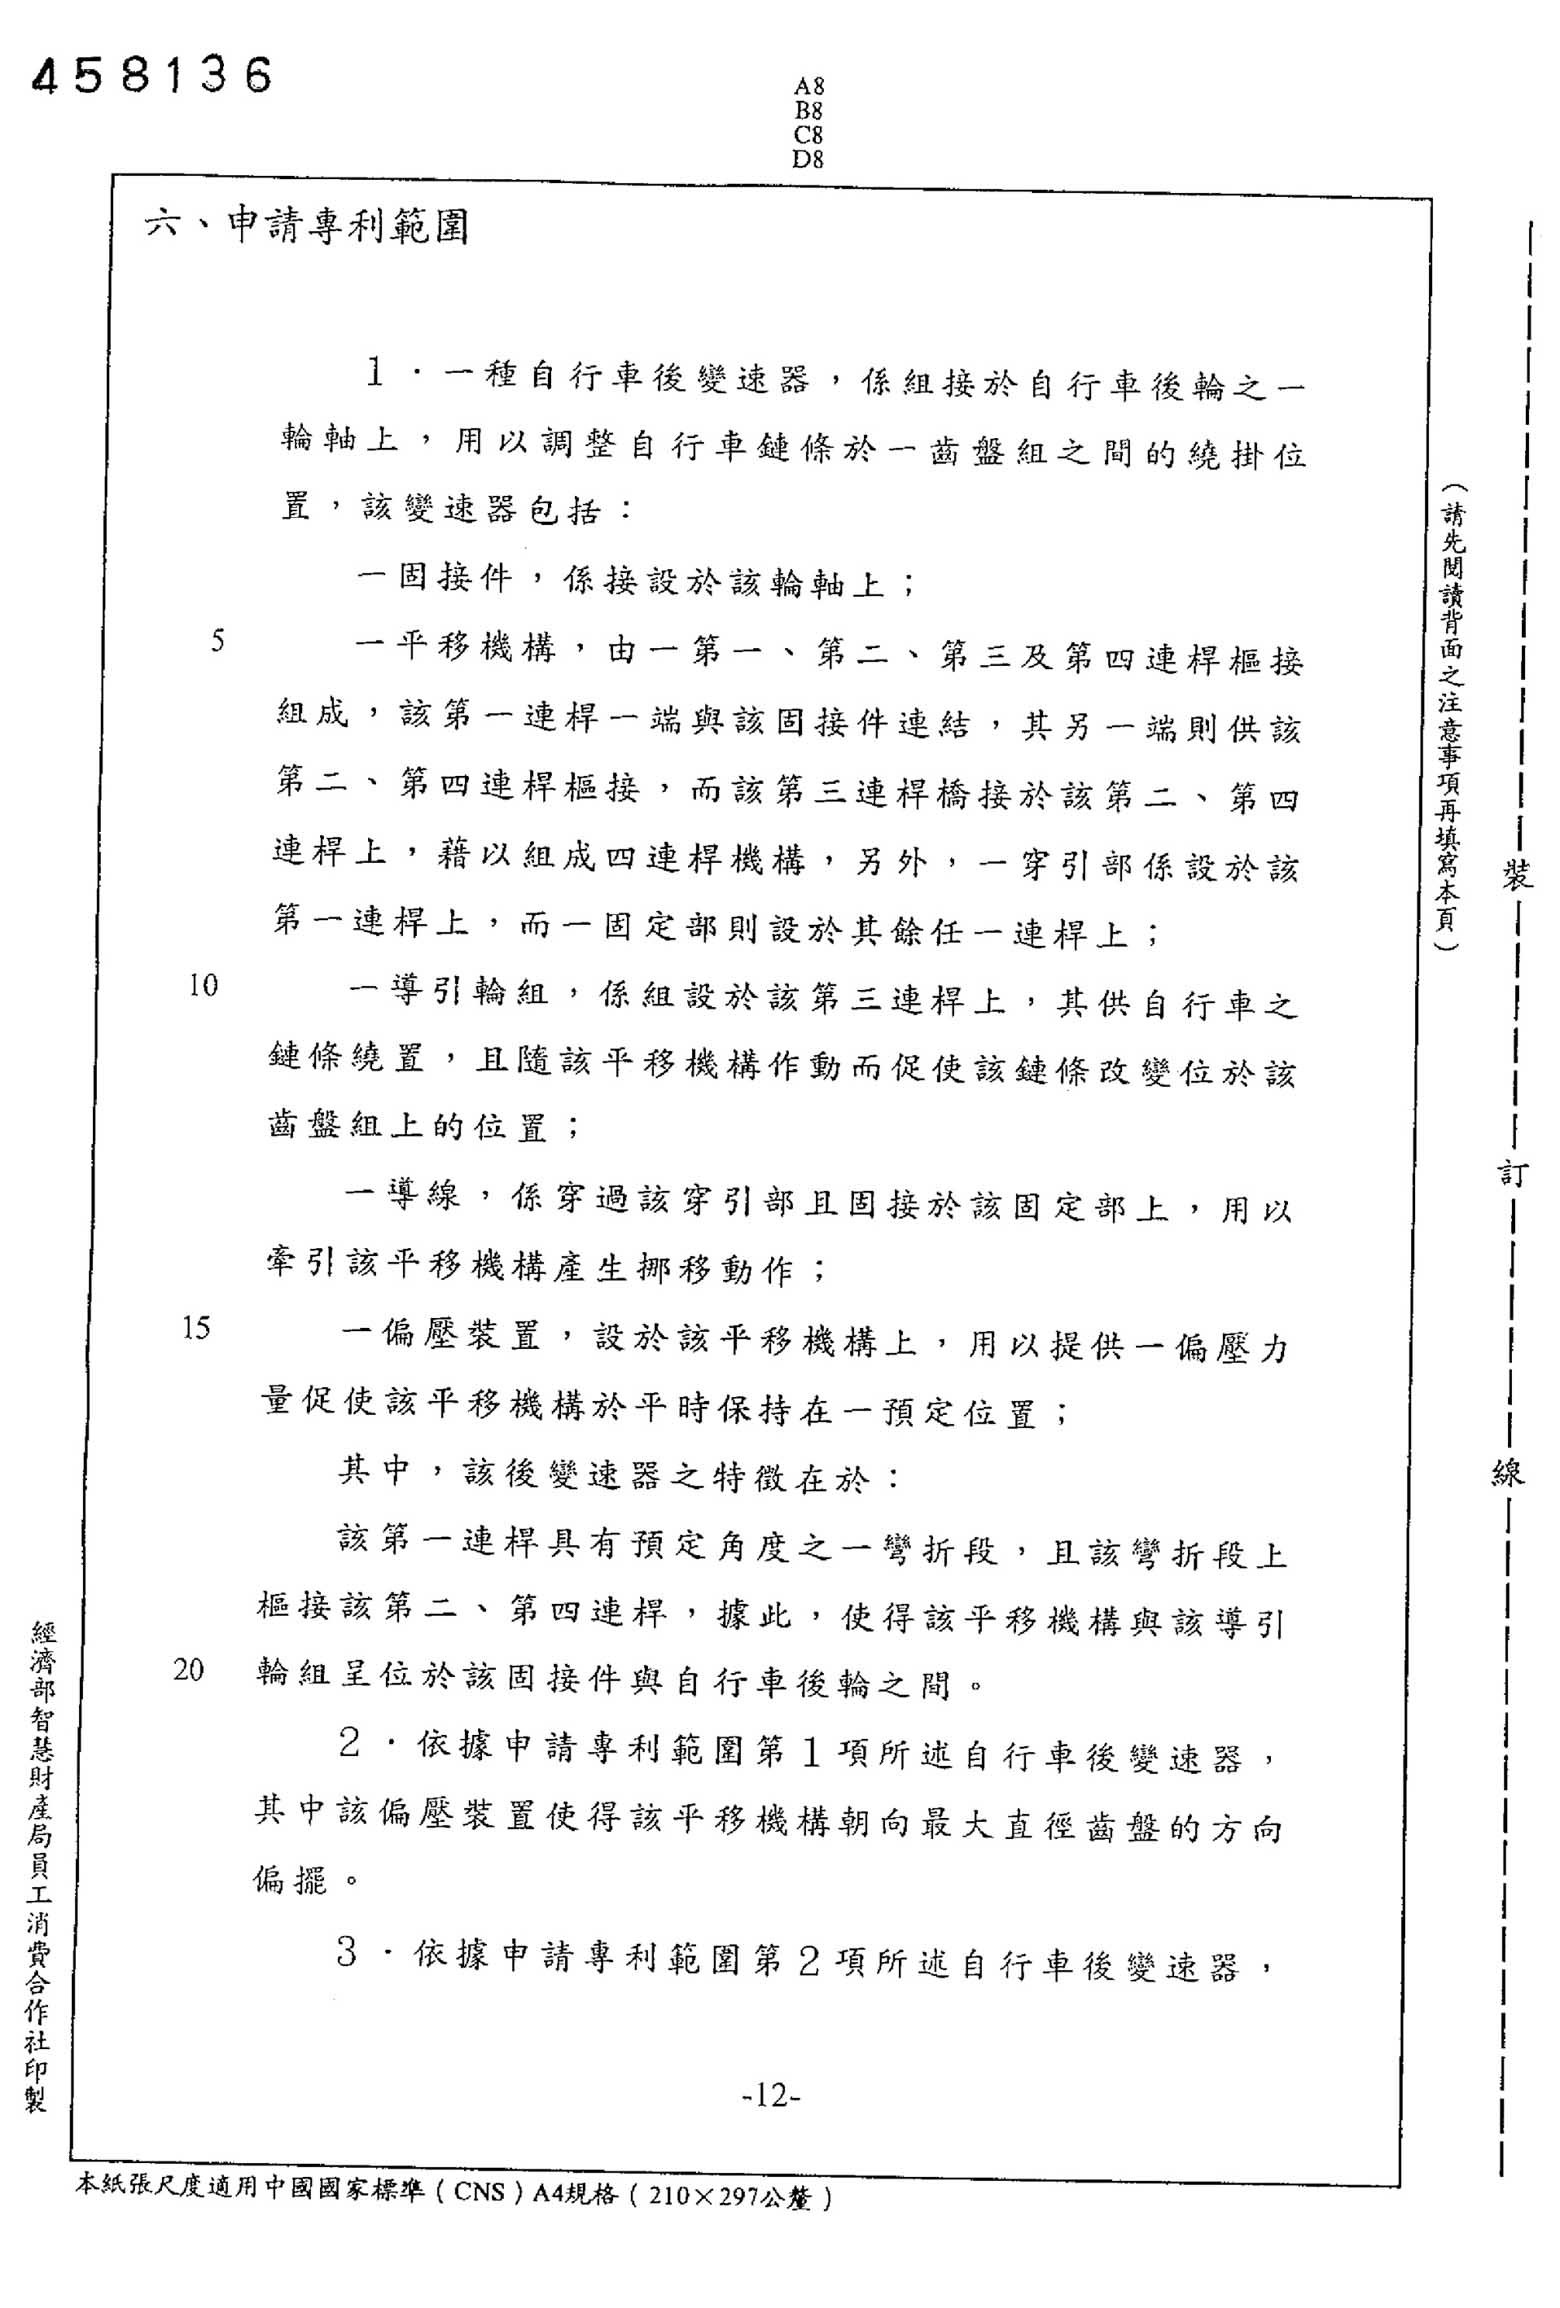 Taiwan patent 458,136 - Falcon scan 12 main image